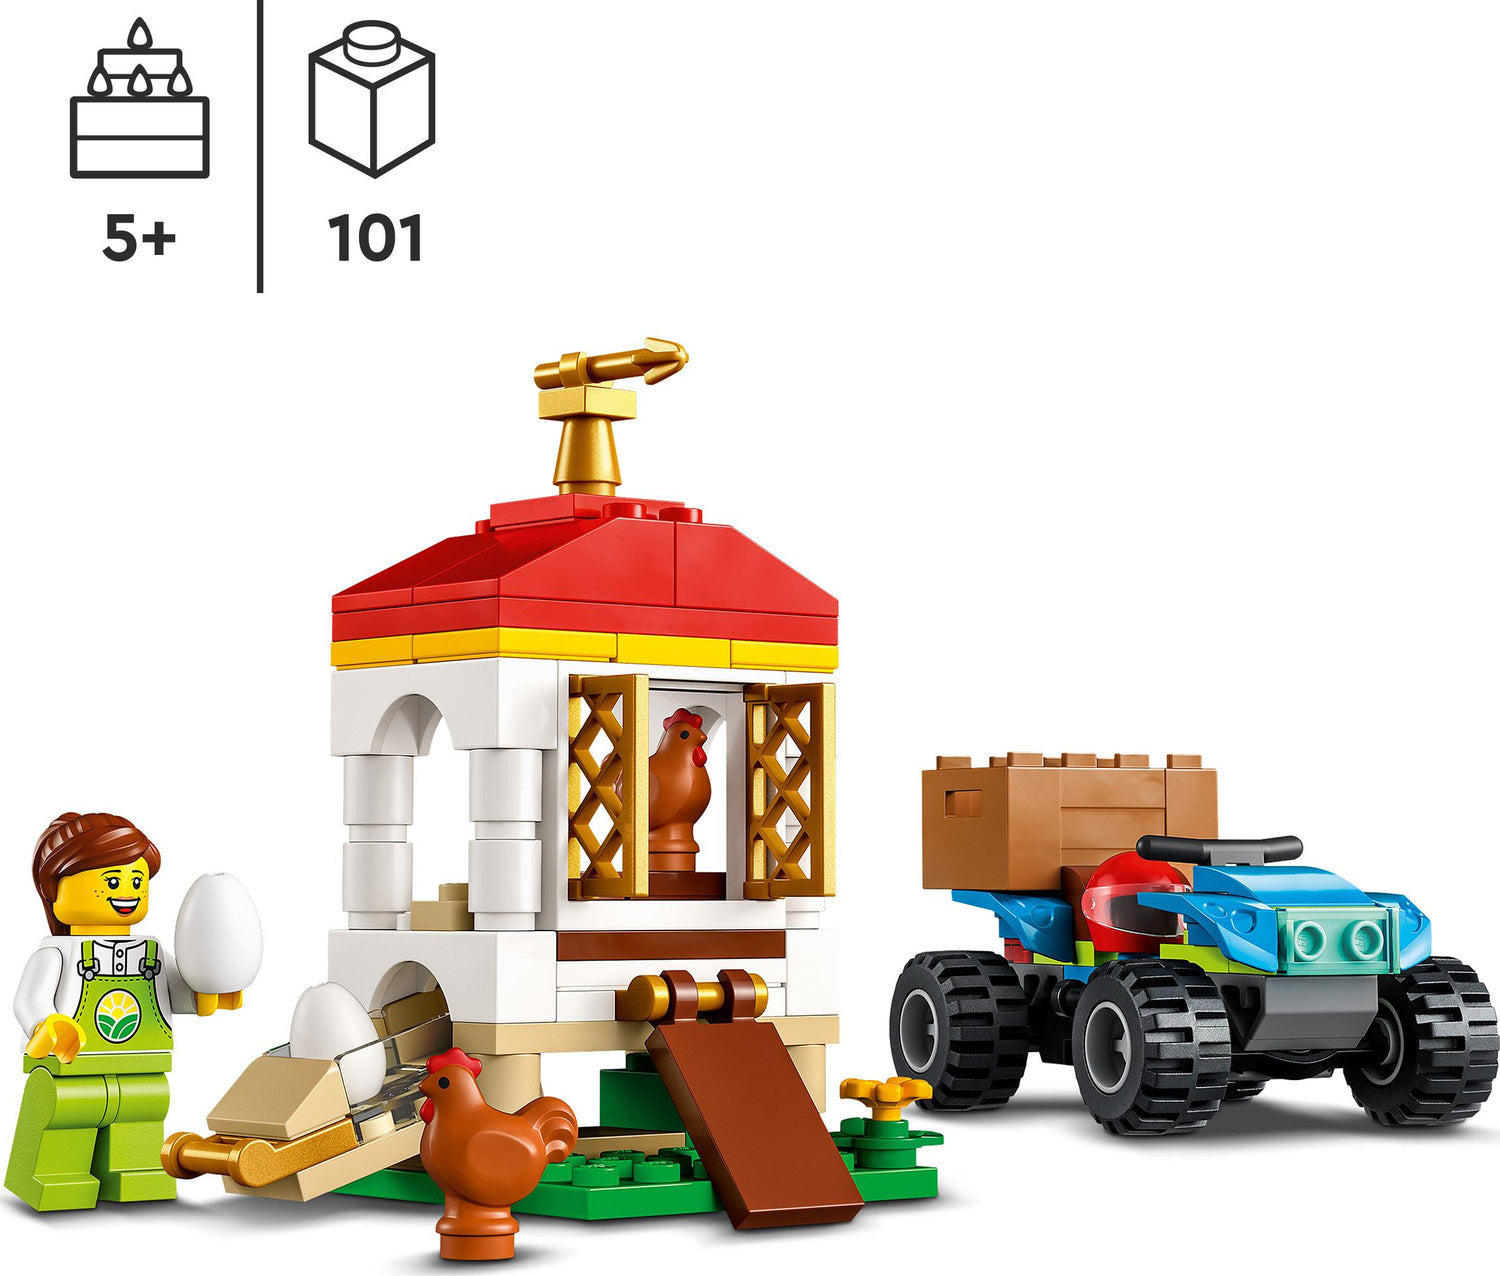 LEGO® City Chicken Henhouse Farm Toy for Kids